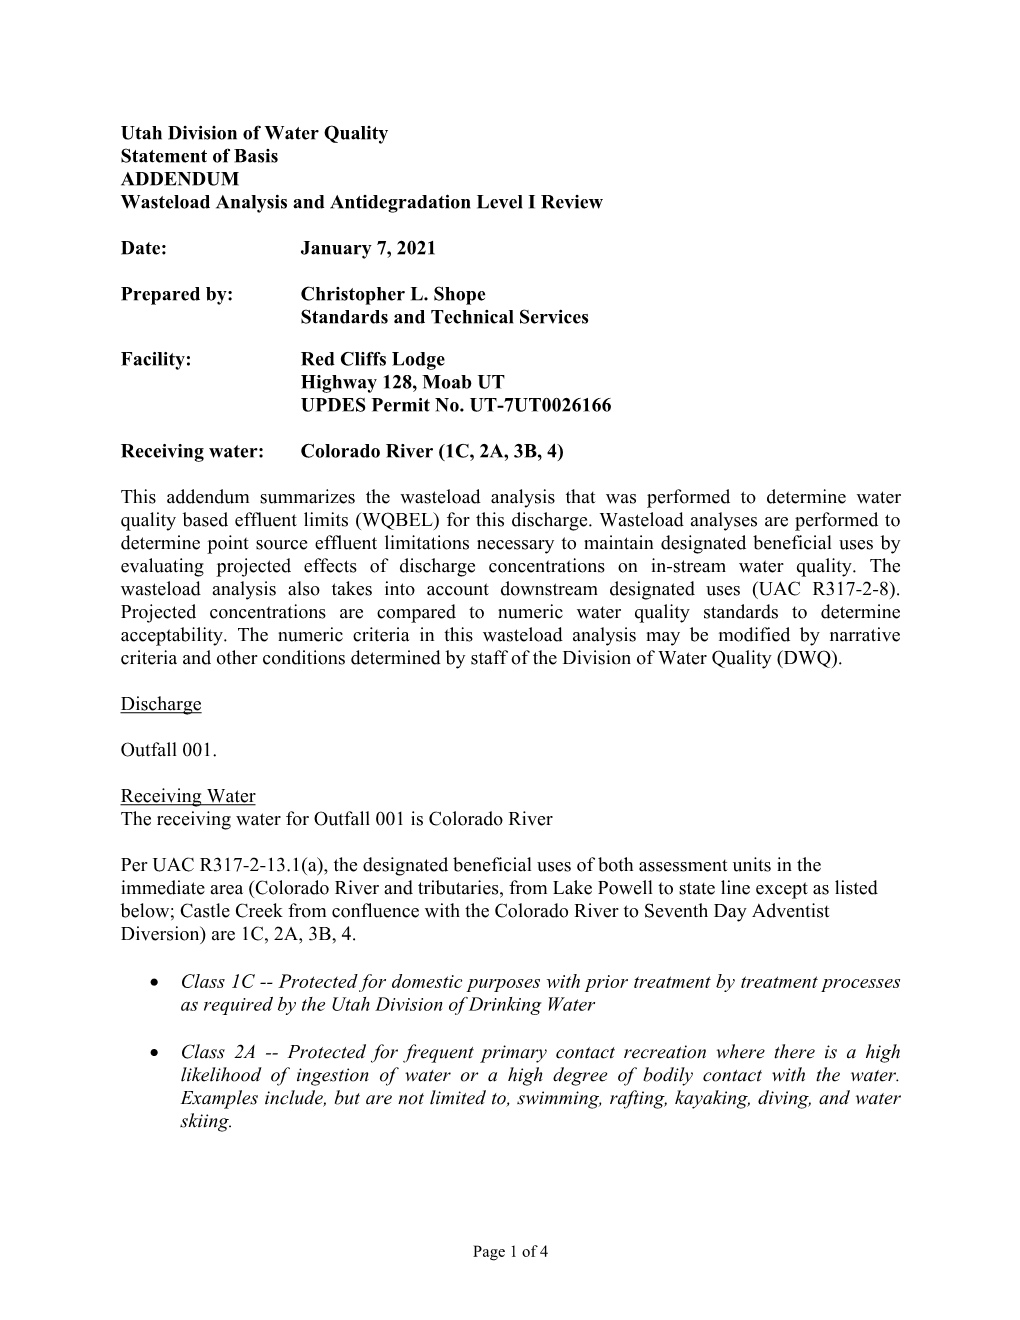 Utah Division of Water Quality Statement of Basis ADDENDUM Wasteload Analysis and Antidegradation Level I Review